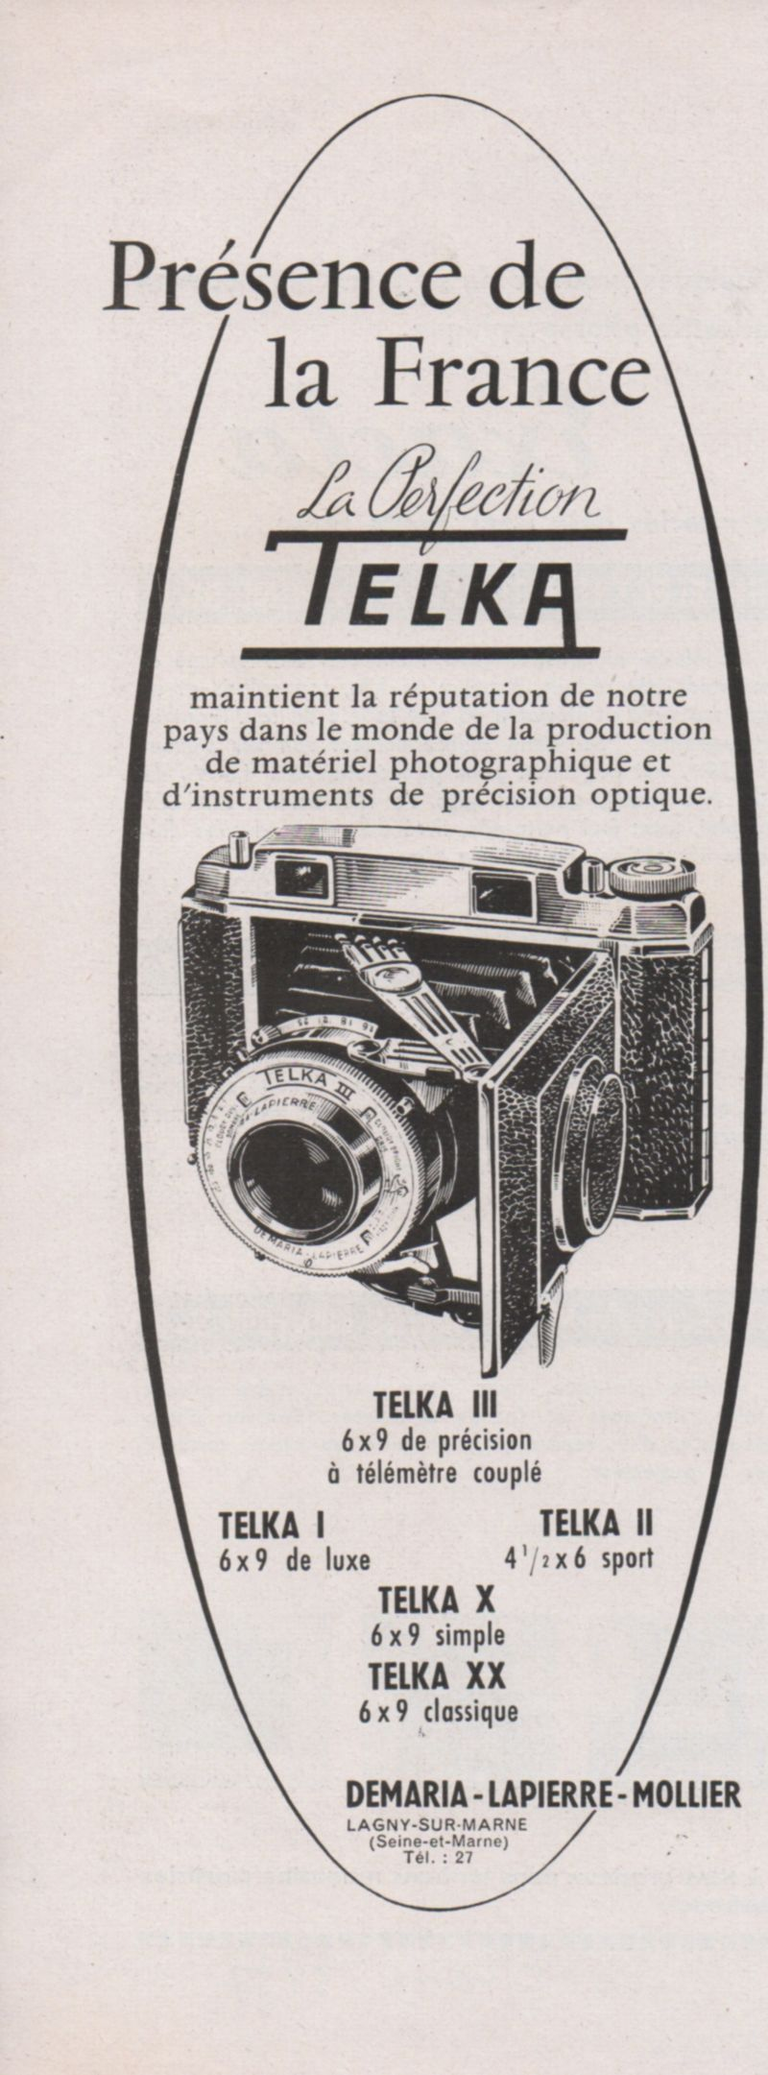 Demaria-Lapierre-Mollier - Telka I, Telka II, Telka III, Telka X, Telka XX  - janvier 1957 - Photo-Cinéma